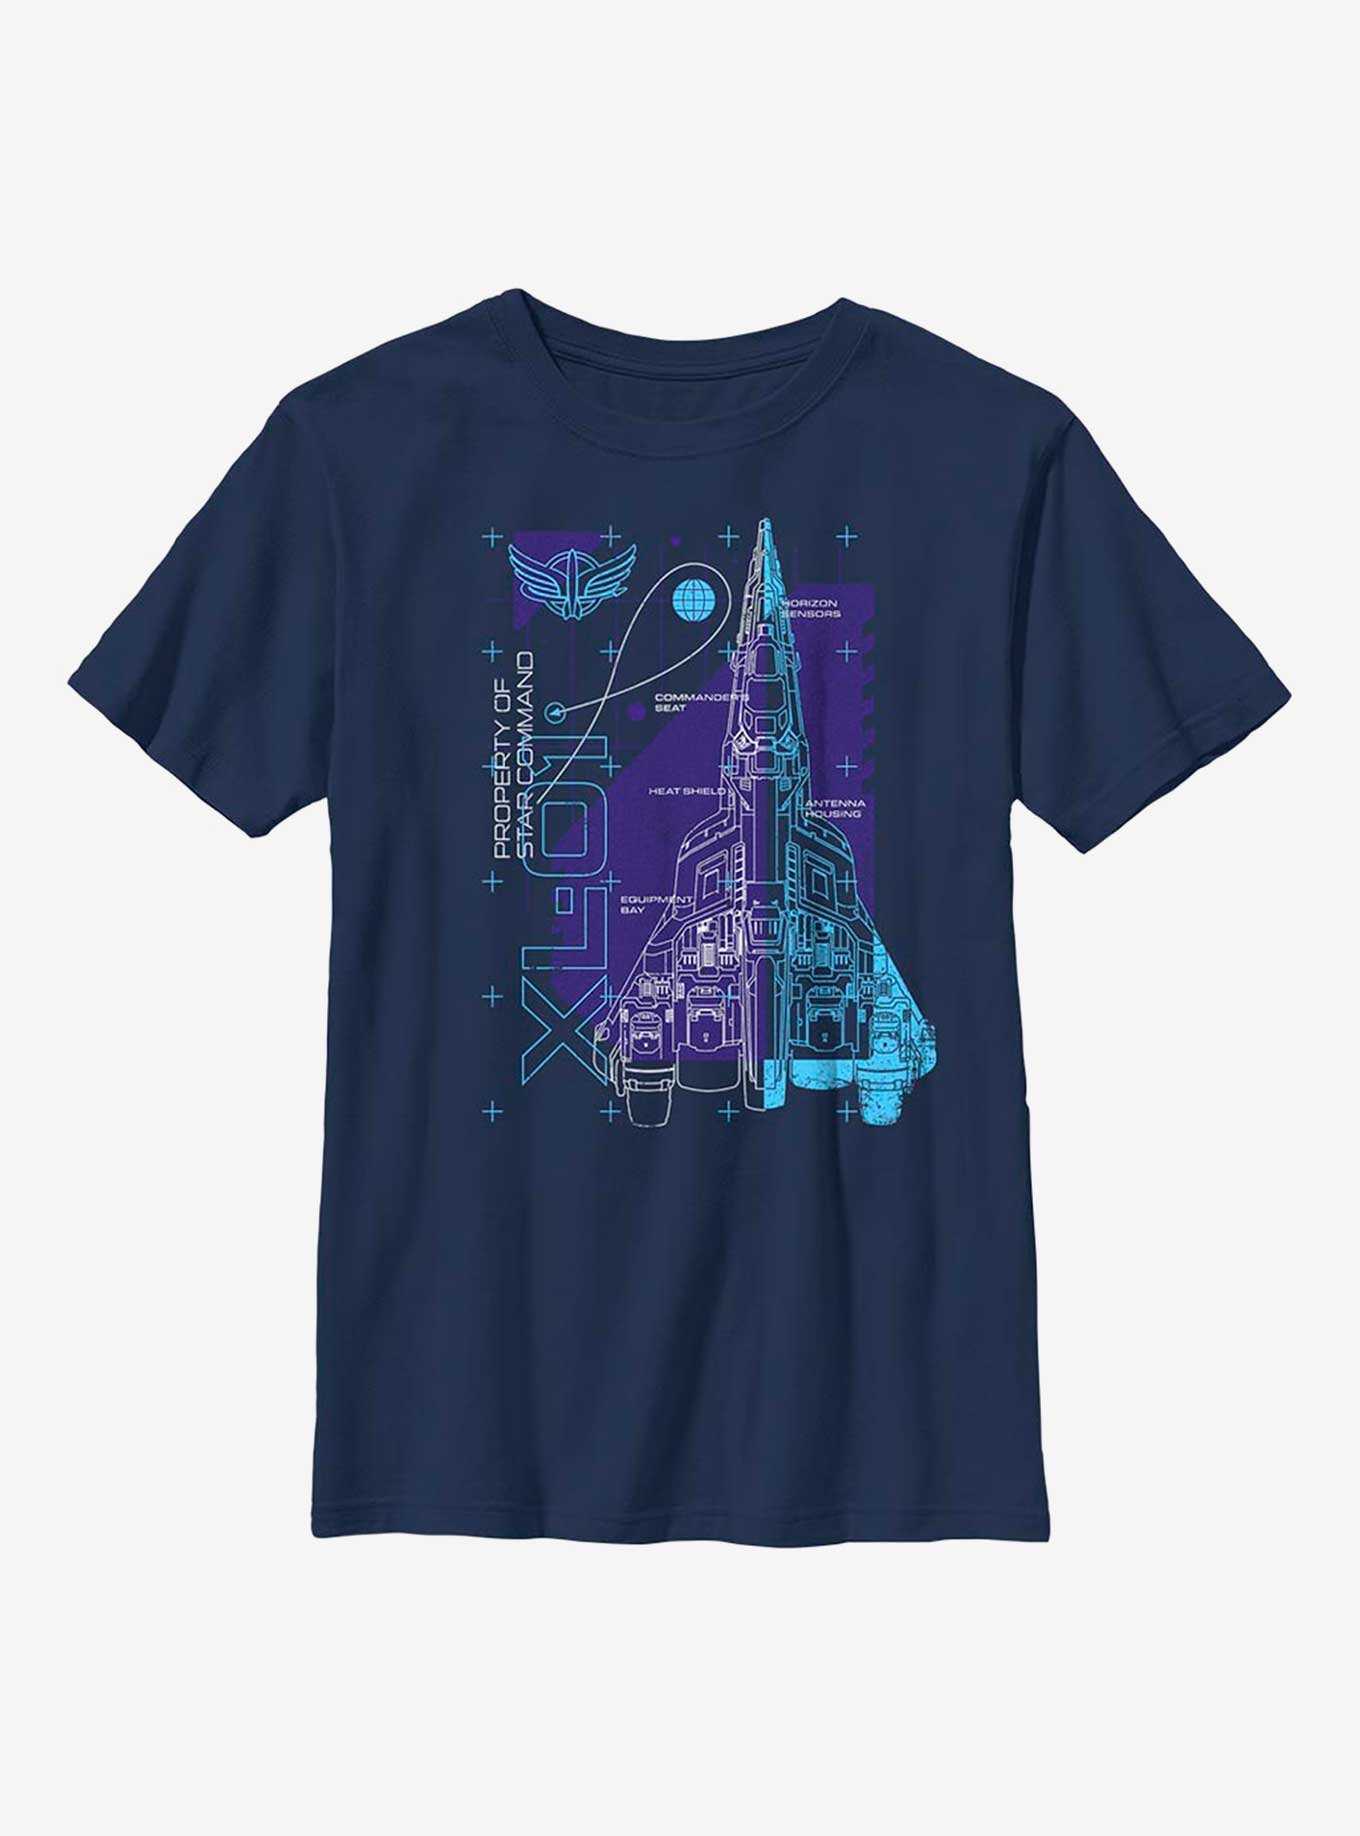 Disney Pixar Lightyear Ship Schematic Youth T-Shirt, , hi-res